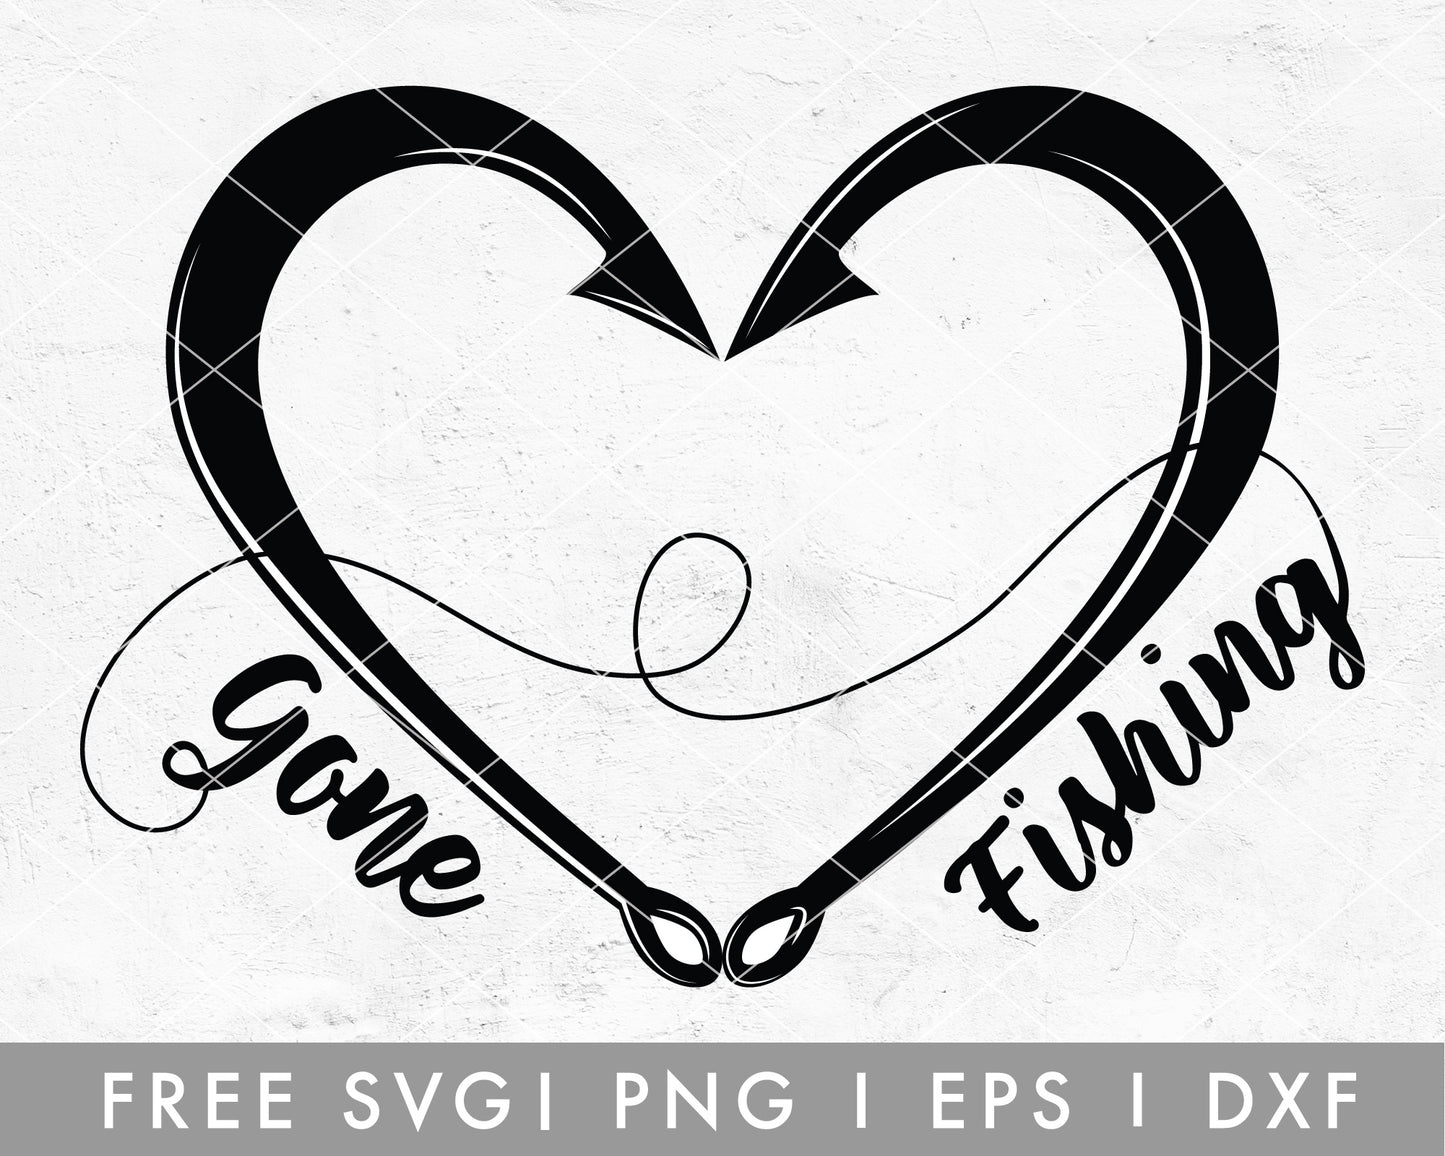 FREE Fishing SVG | Love Fishing SVG Cut File for Cricut, Cameo Silhouette | Free SVG Cut File